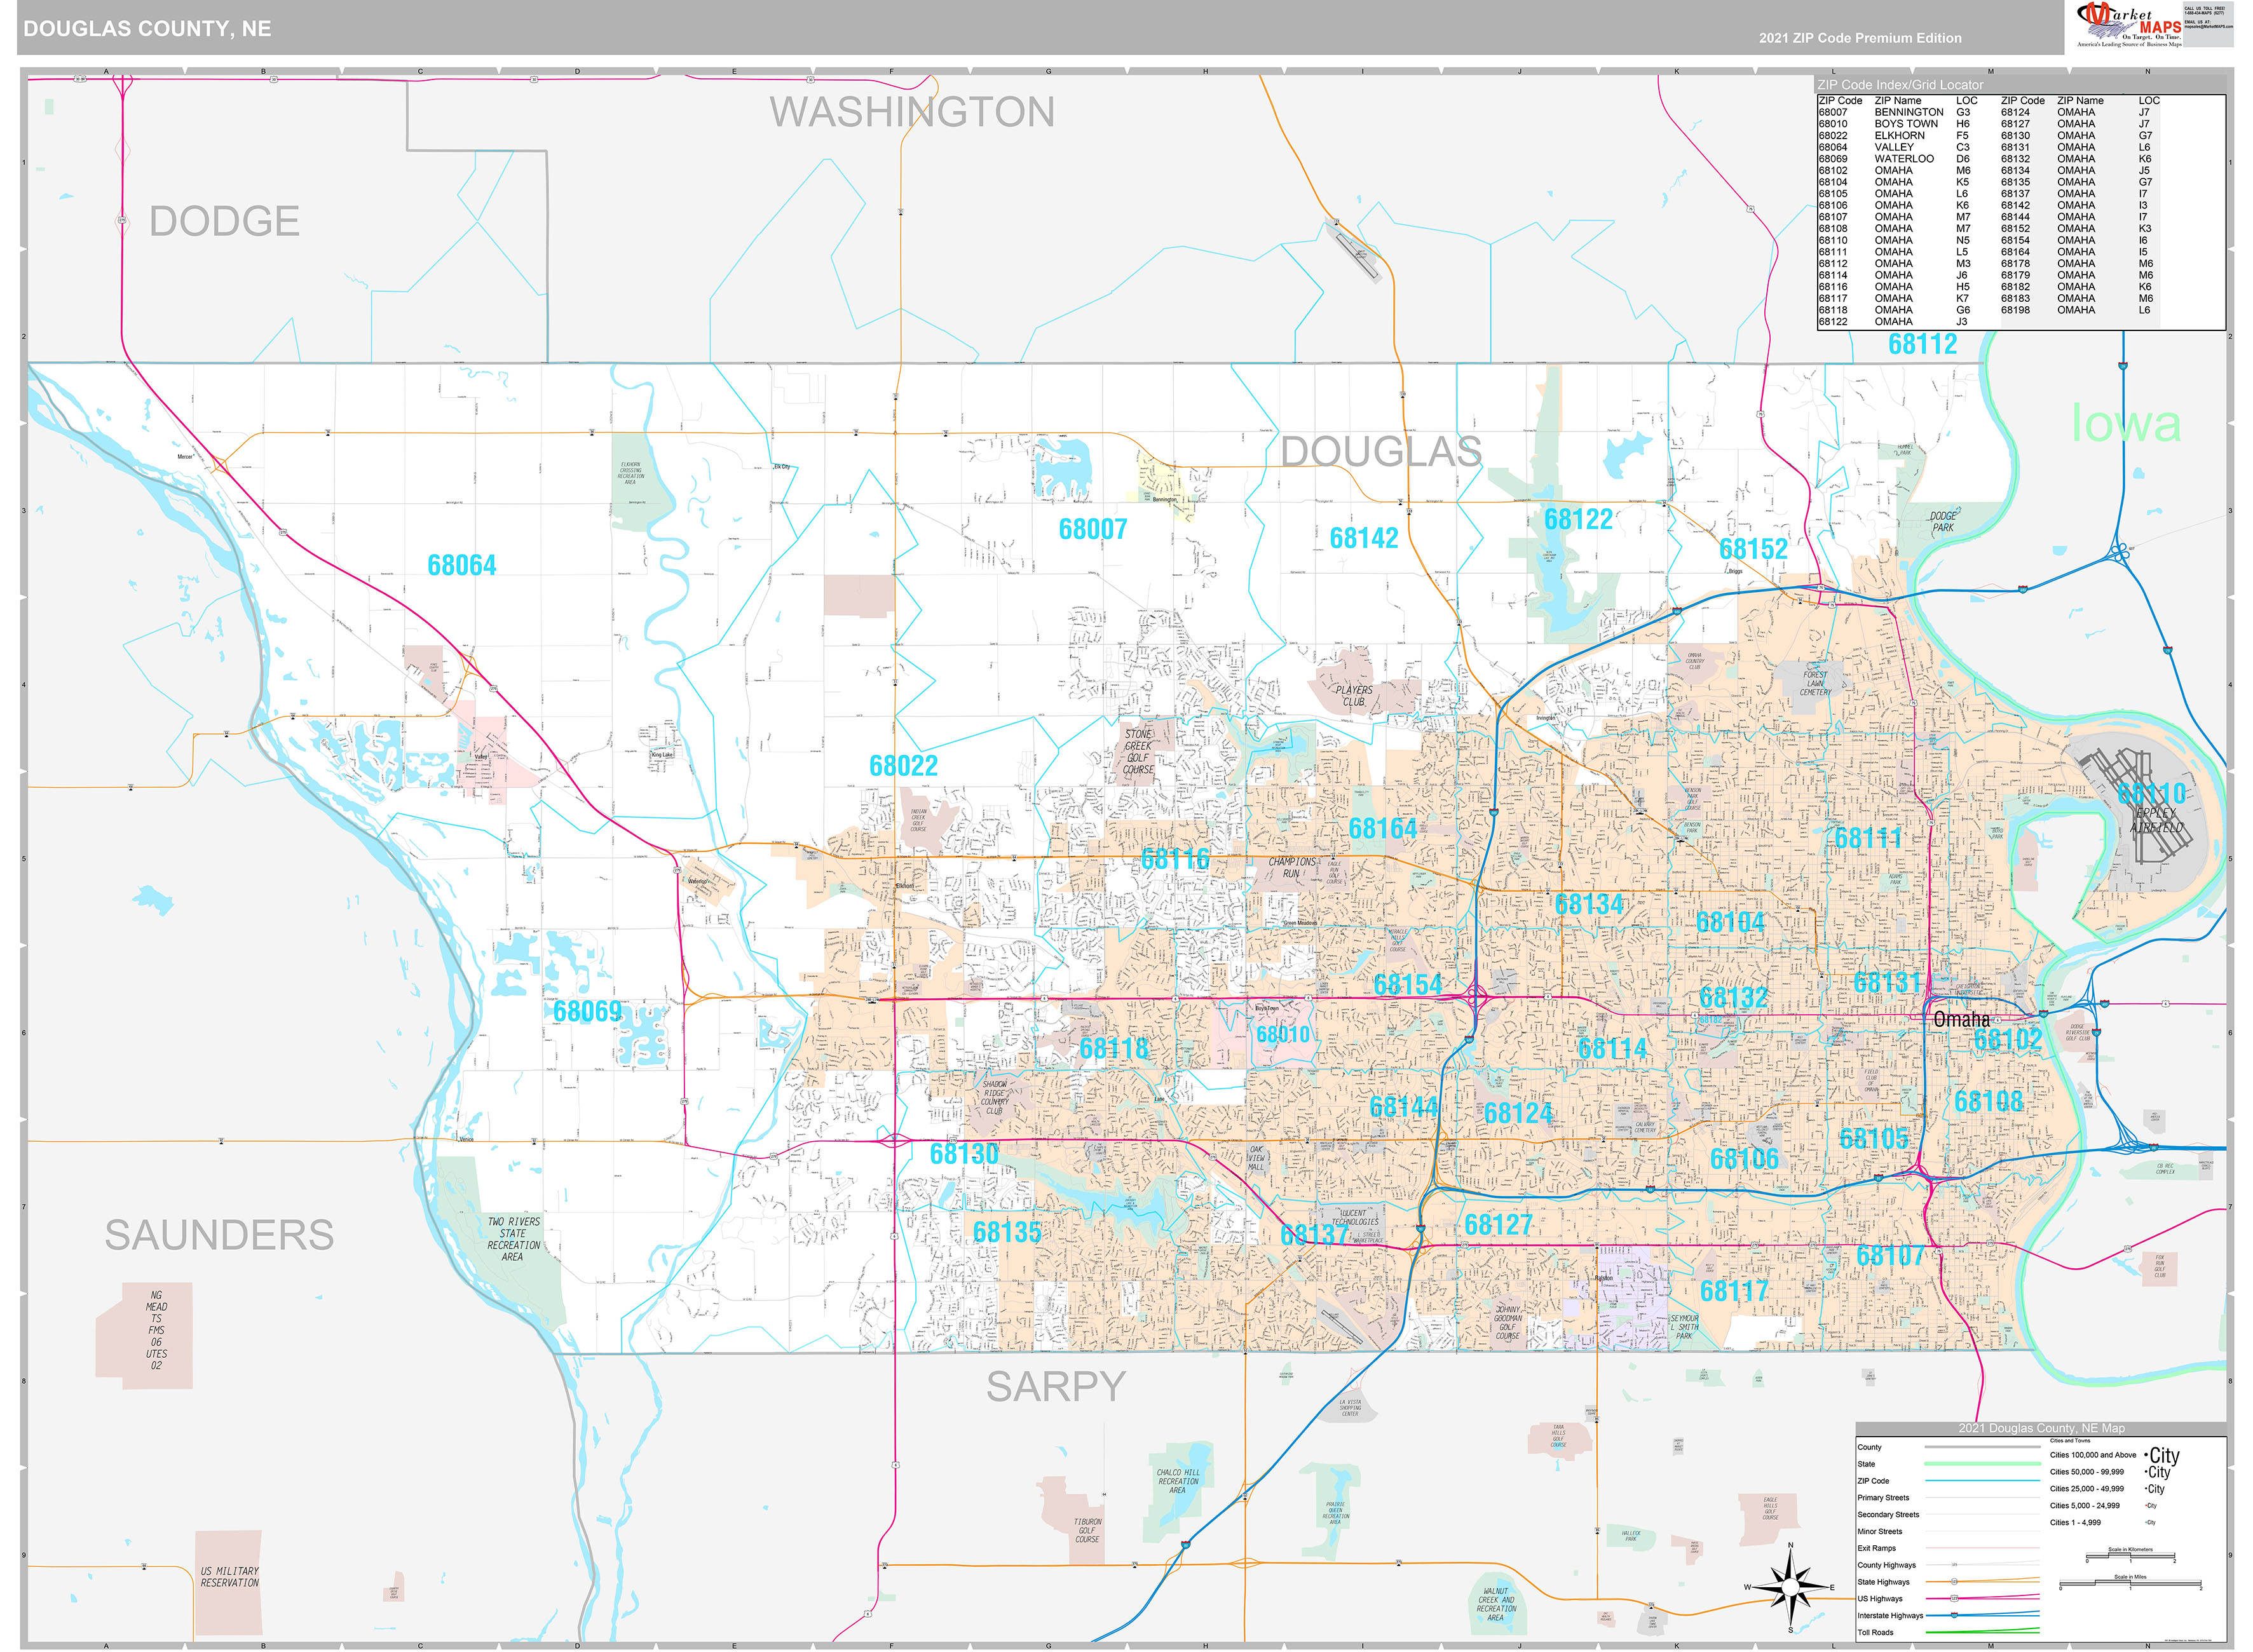 Douglas County, NE Wall Map Premium Style by MarketMAPS